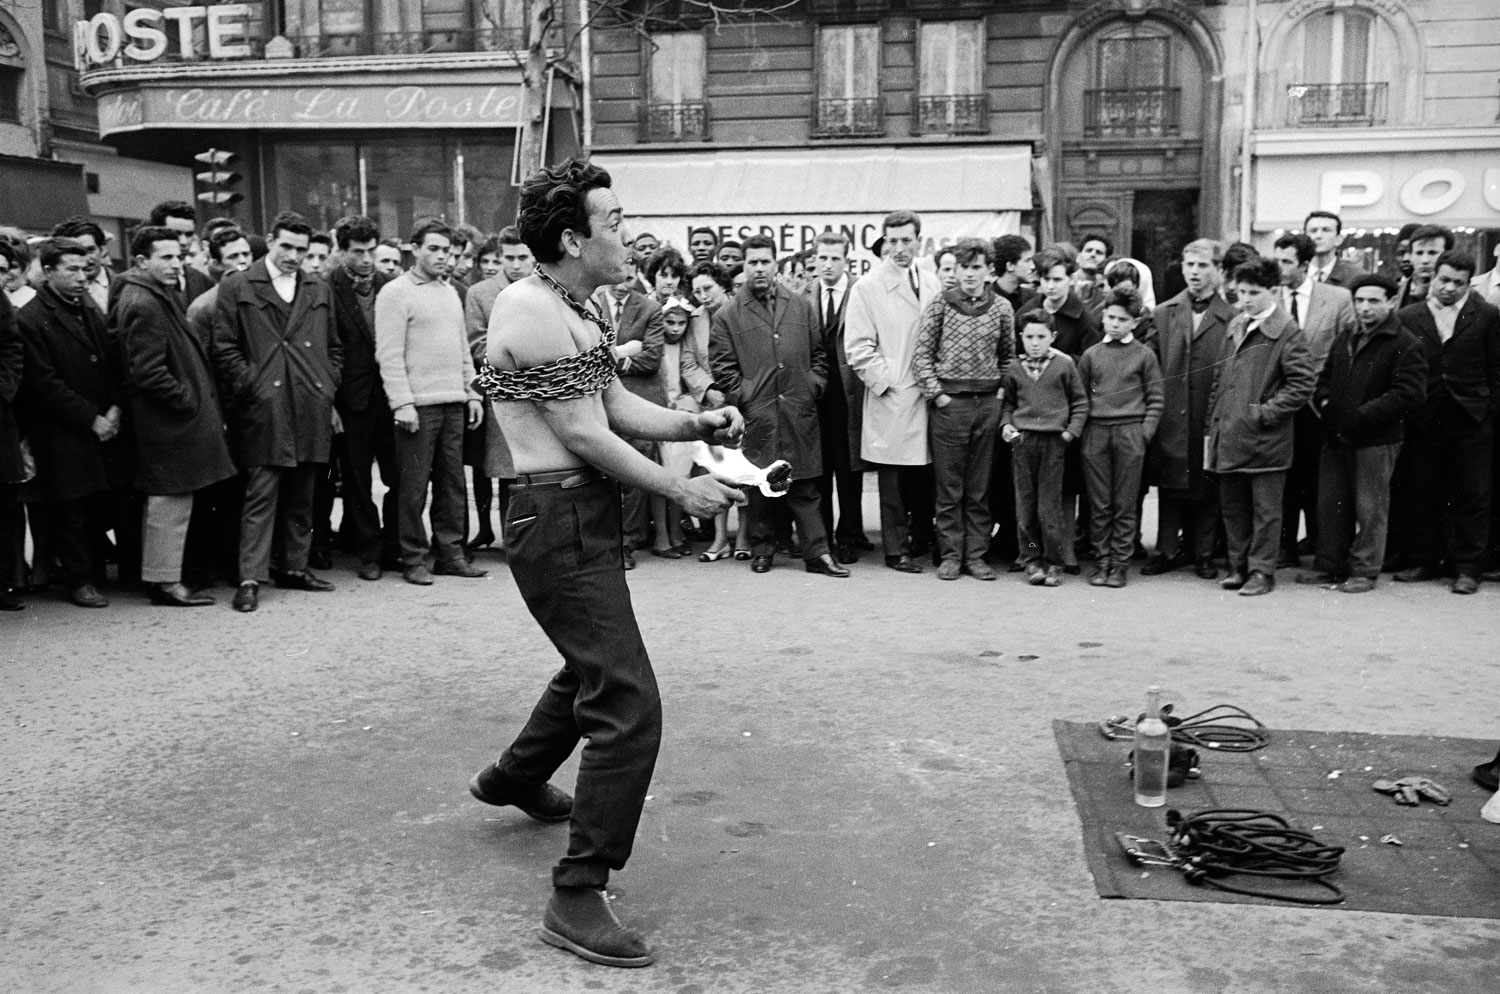 Street performer drawing a crowd, Paris, 1963.